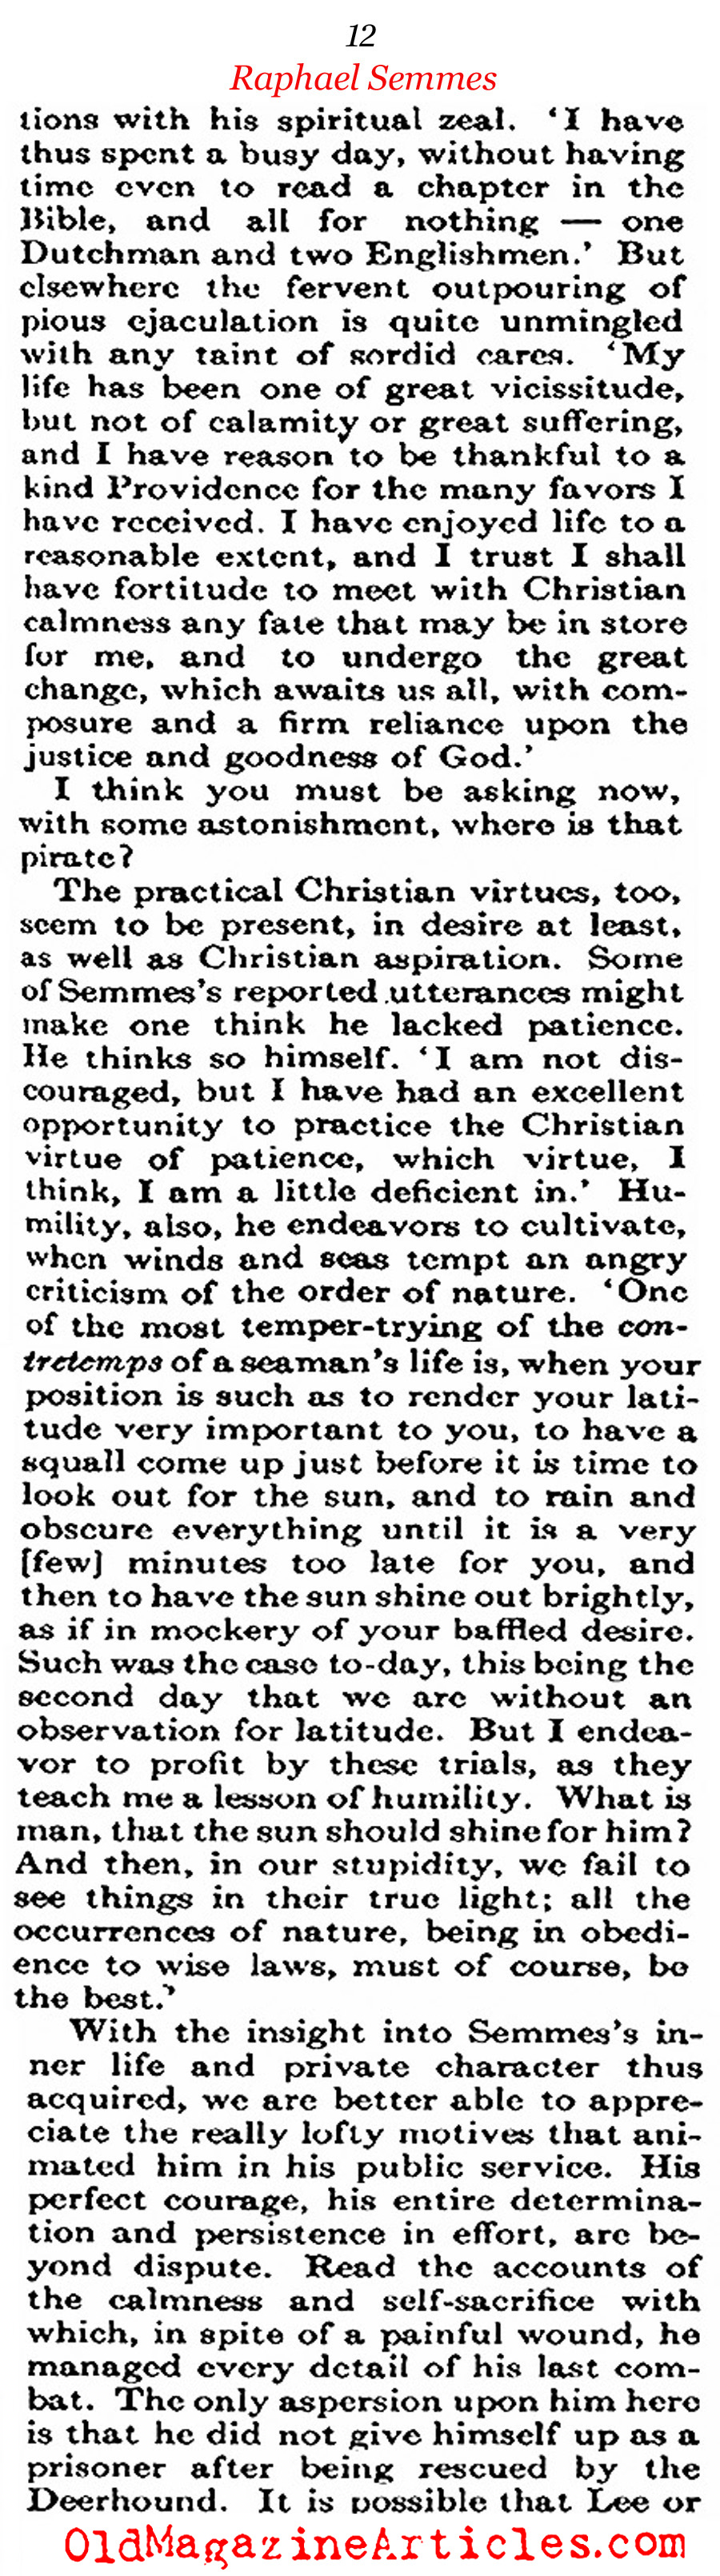  Civil War Pirate Raphael Semmes (Atlantic Monthly, 1913)